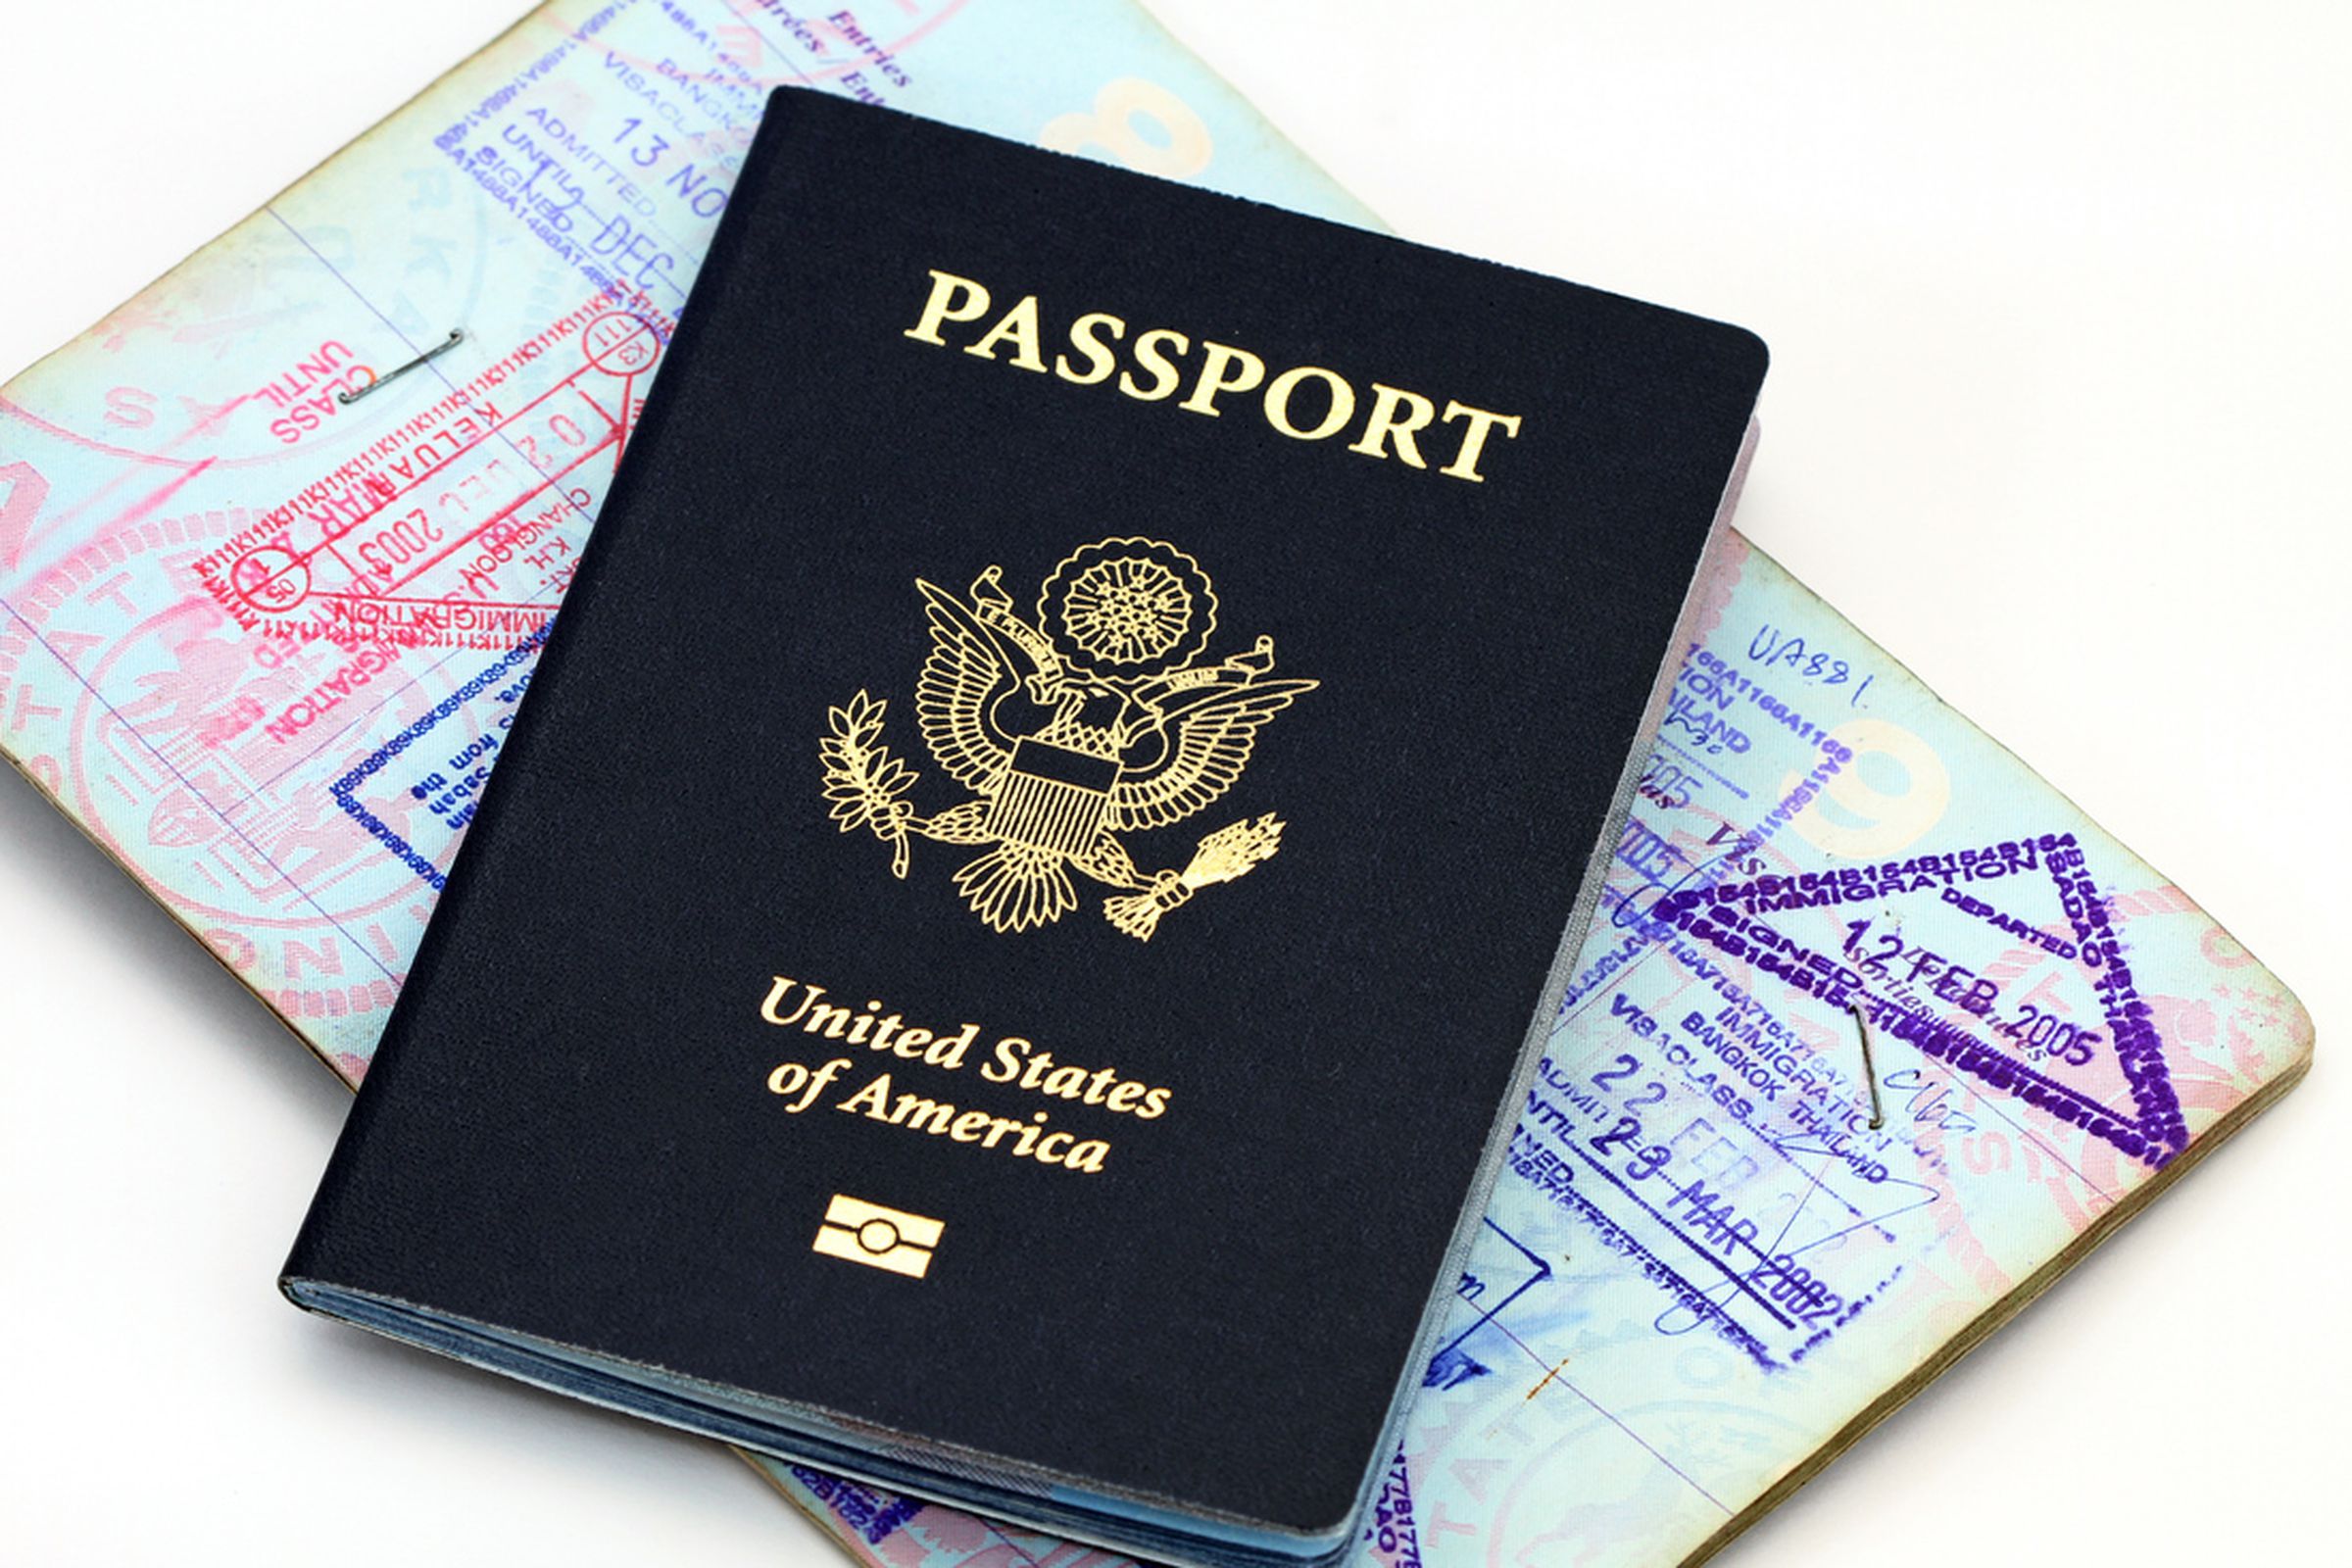 US passports will soon offer an X gender marker